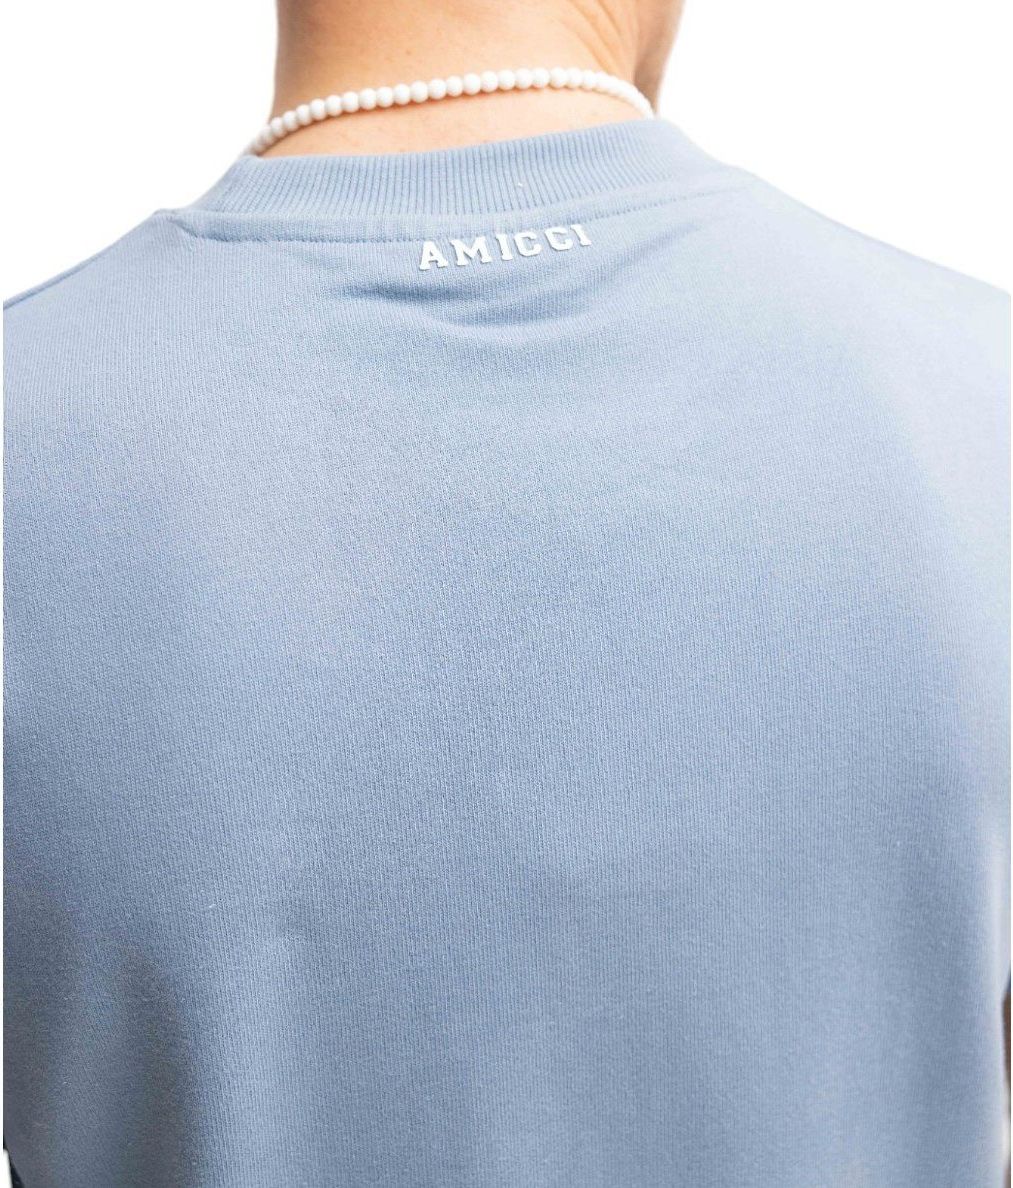 Amicci Amicci Heren T-shirt Blauw AM047/BLU Vero Blauw